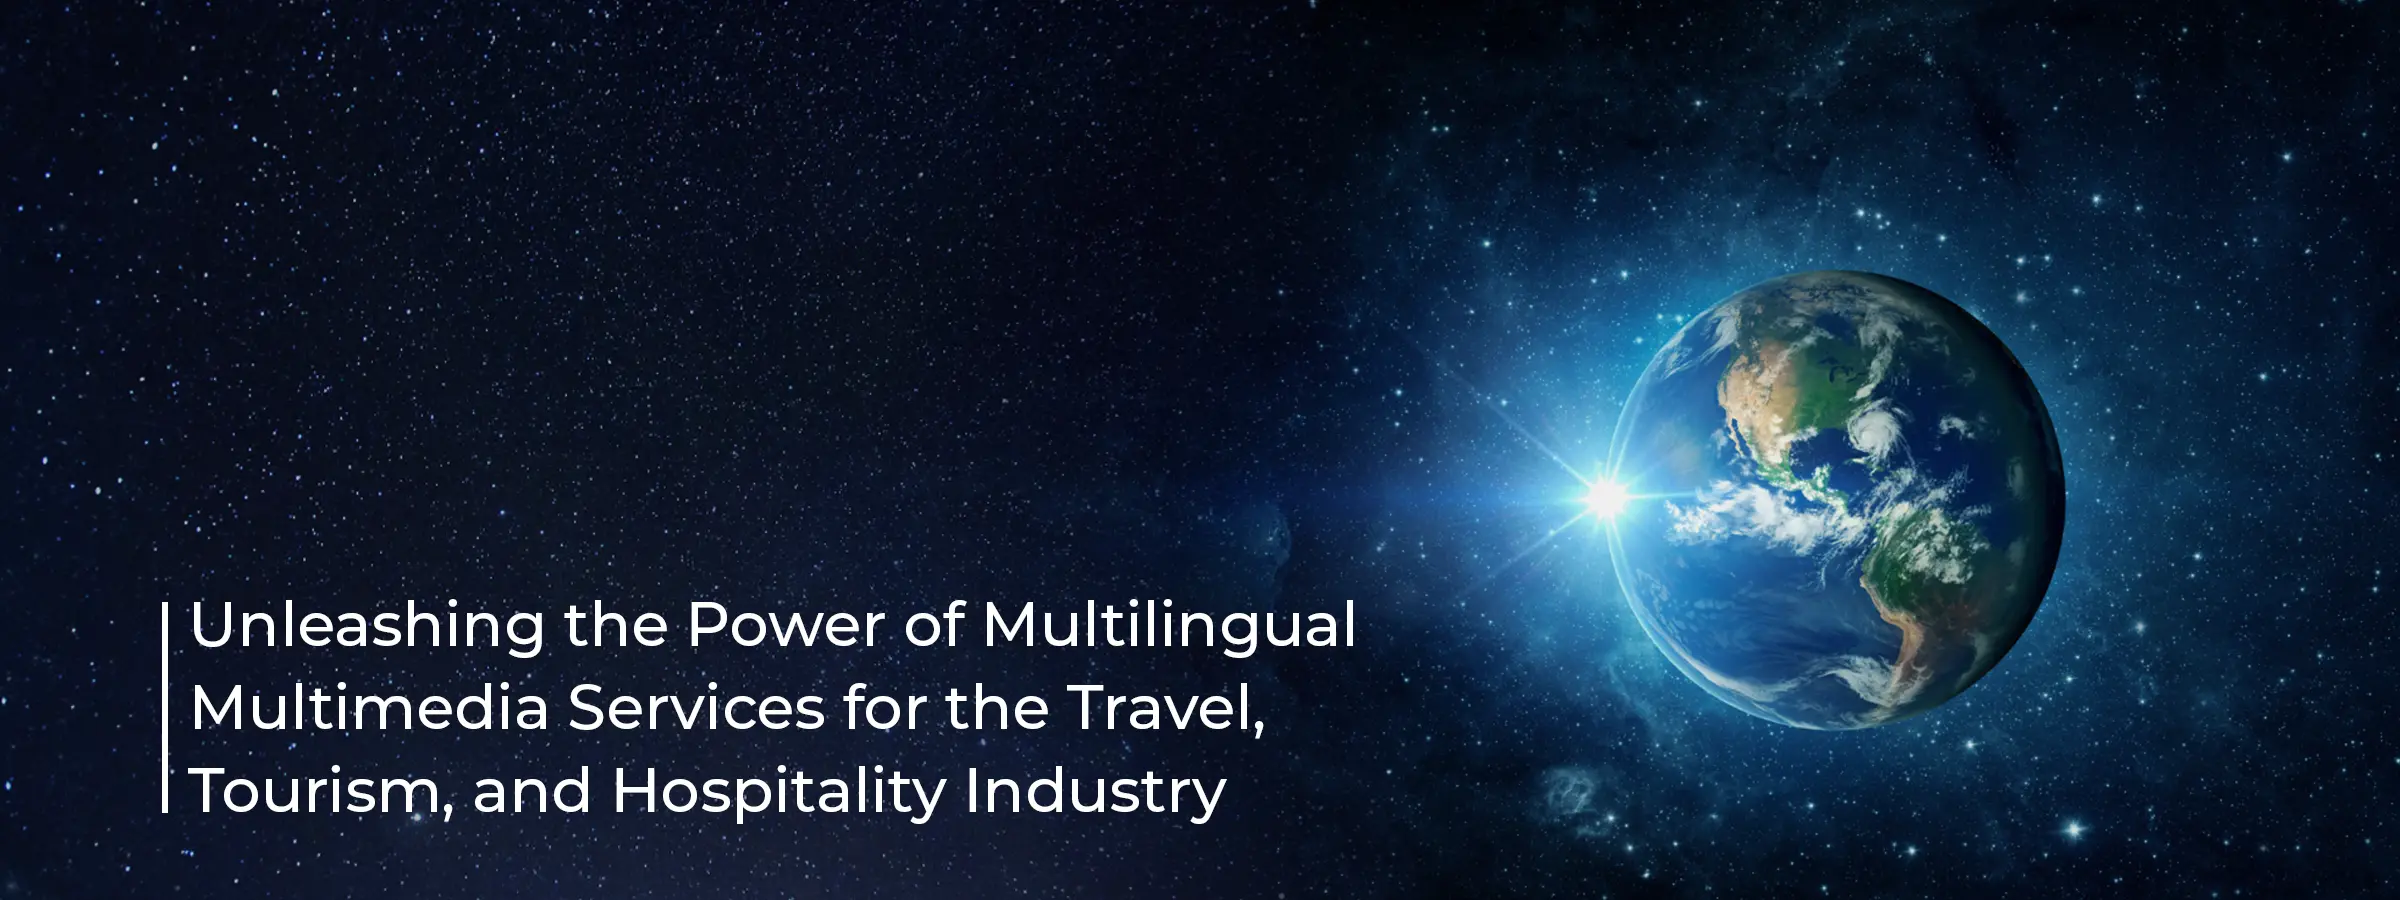 travel-tourism-hospitality-industry